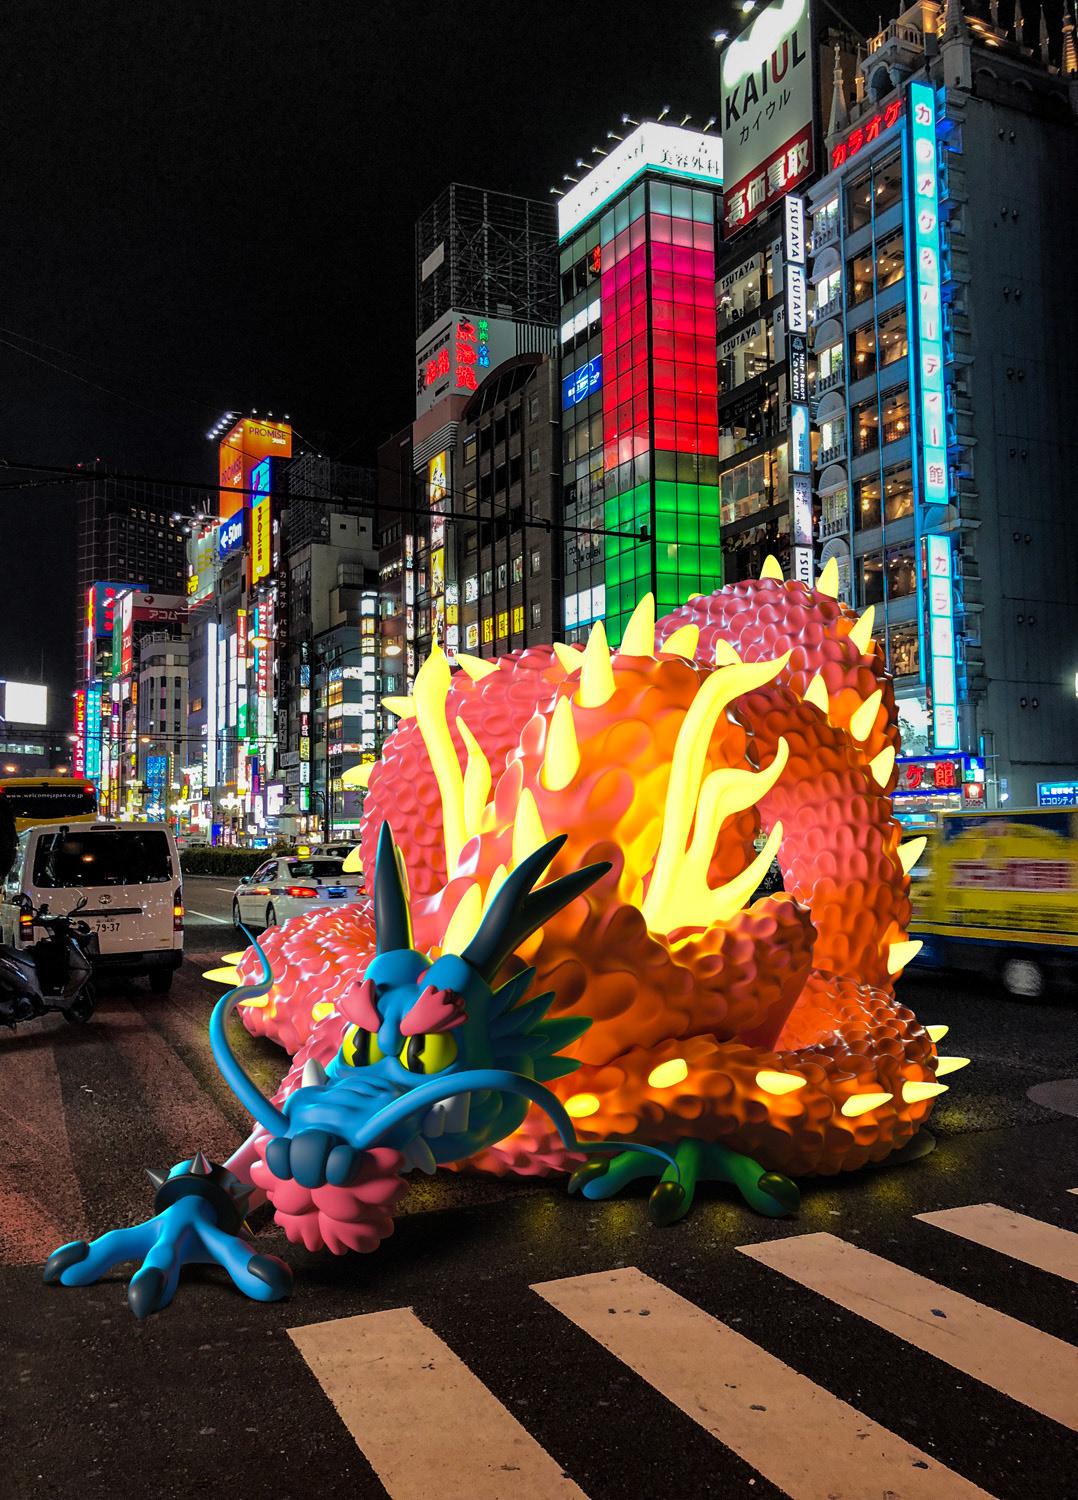 Character japan dragon funny photo monster city kawaii friend composition